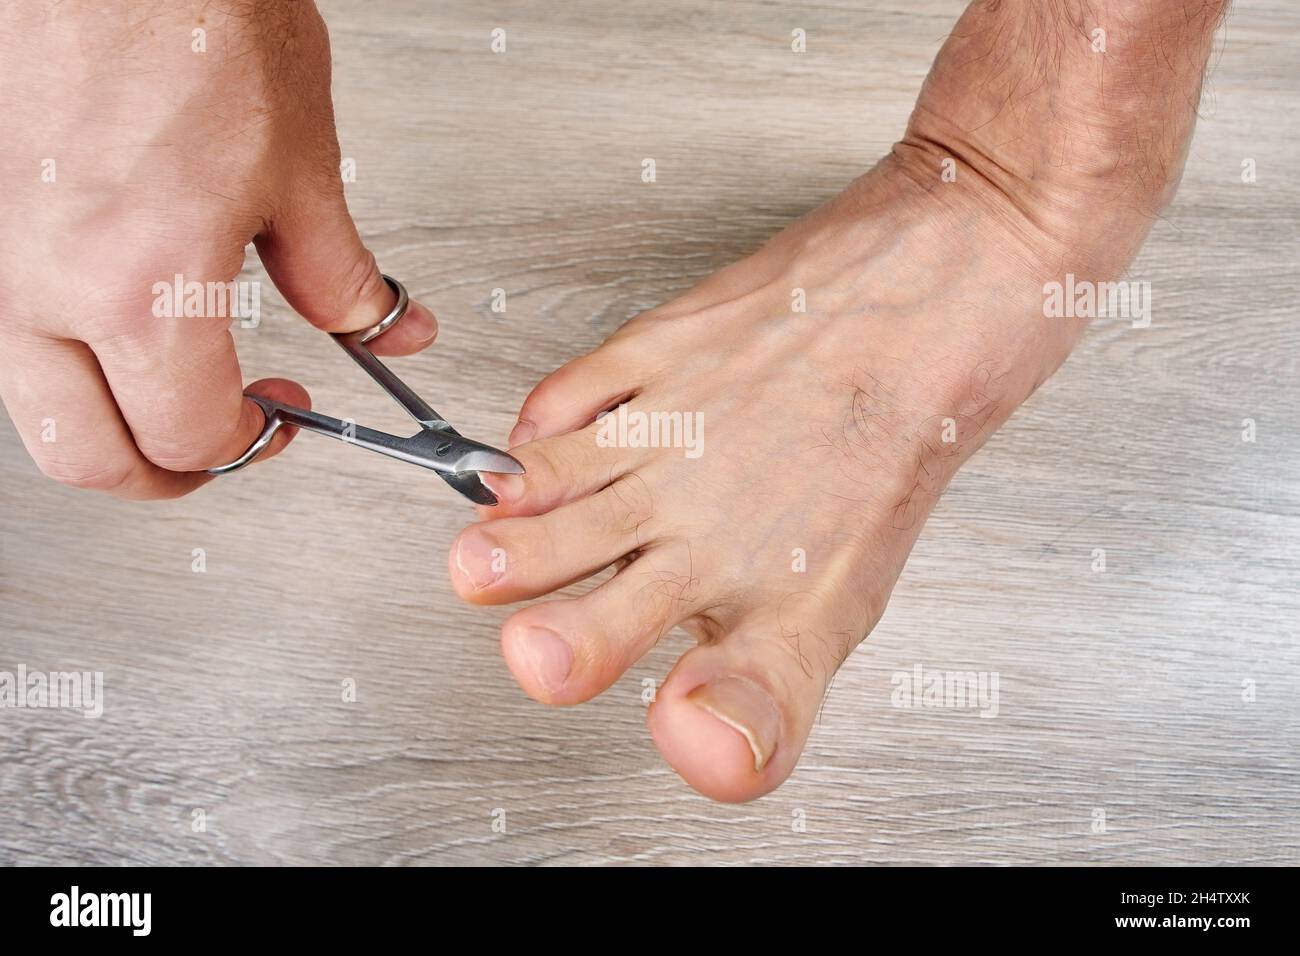 https://c8.alamy.com/comp/2H4TXXK/man-trims-his-toenails-using-toe-nail-scissors-2H4TXXK.jpg